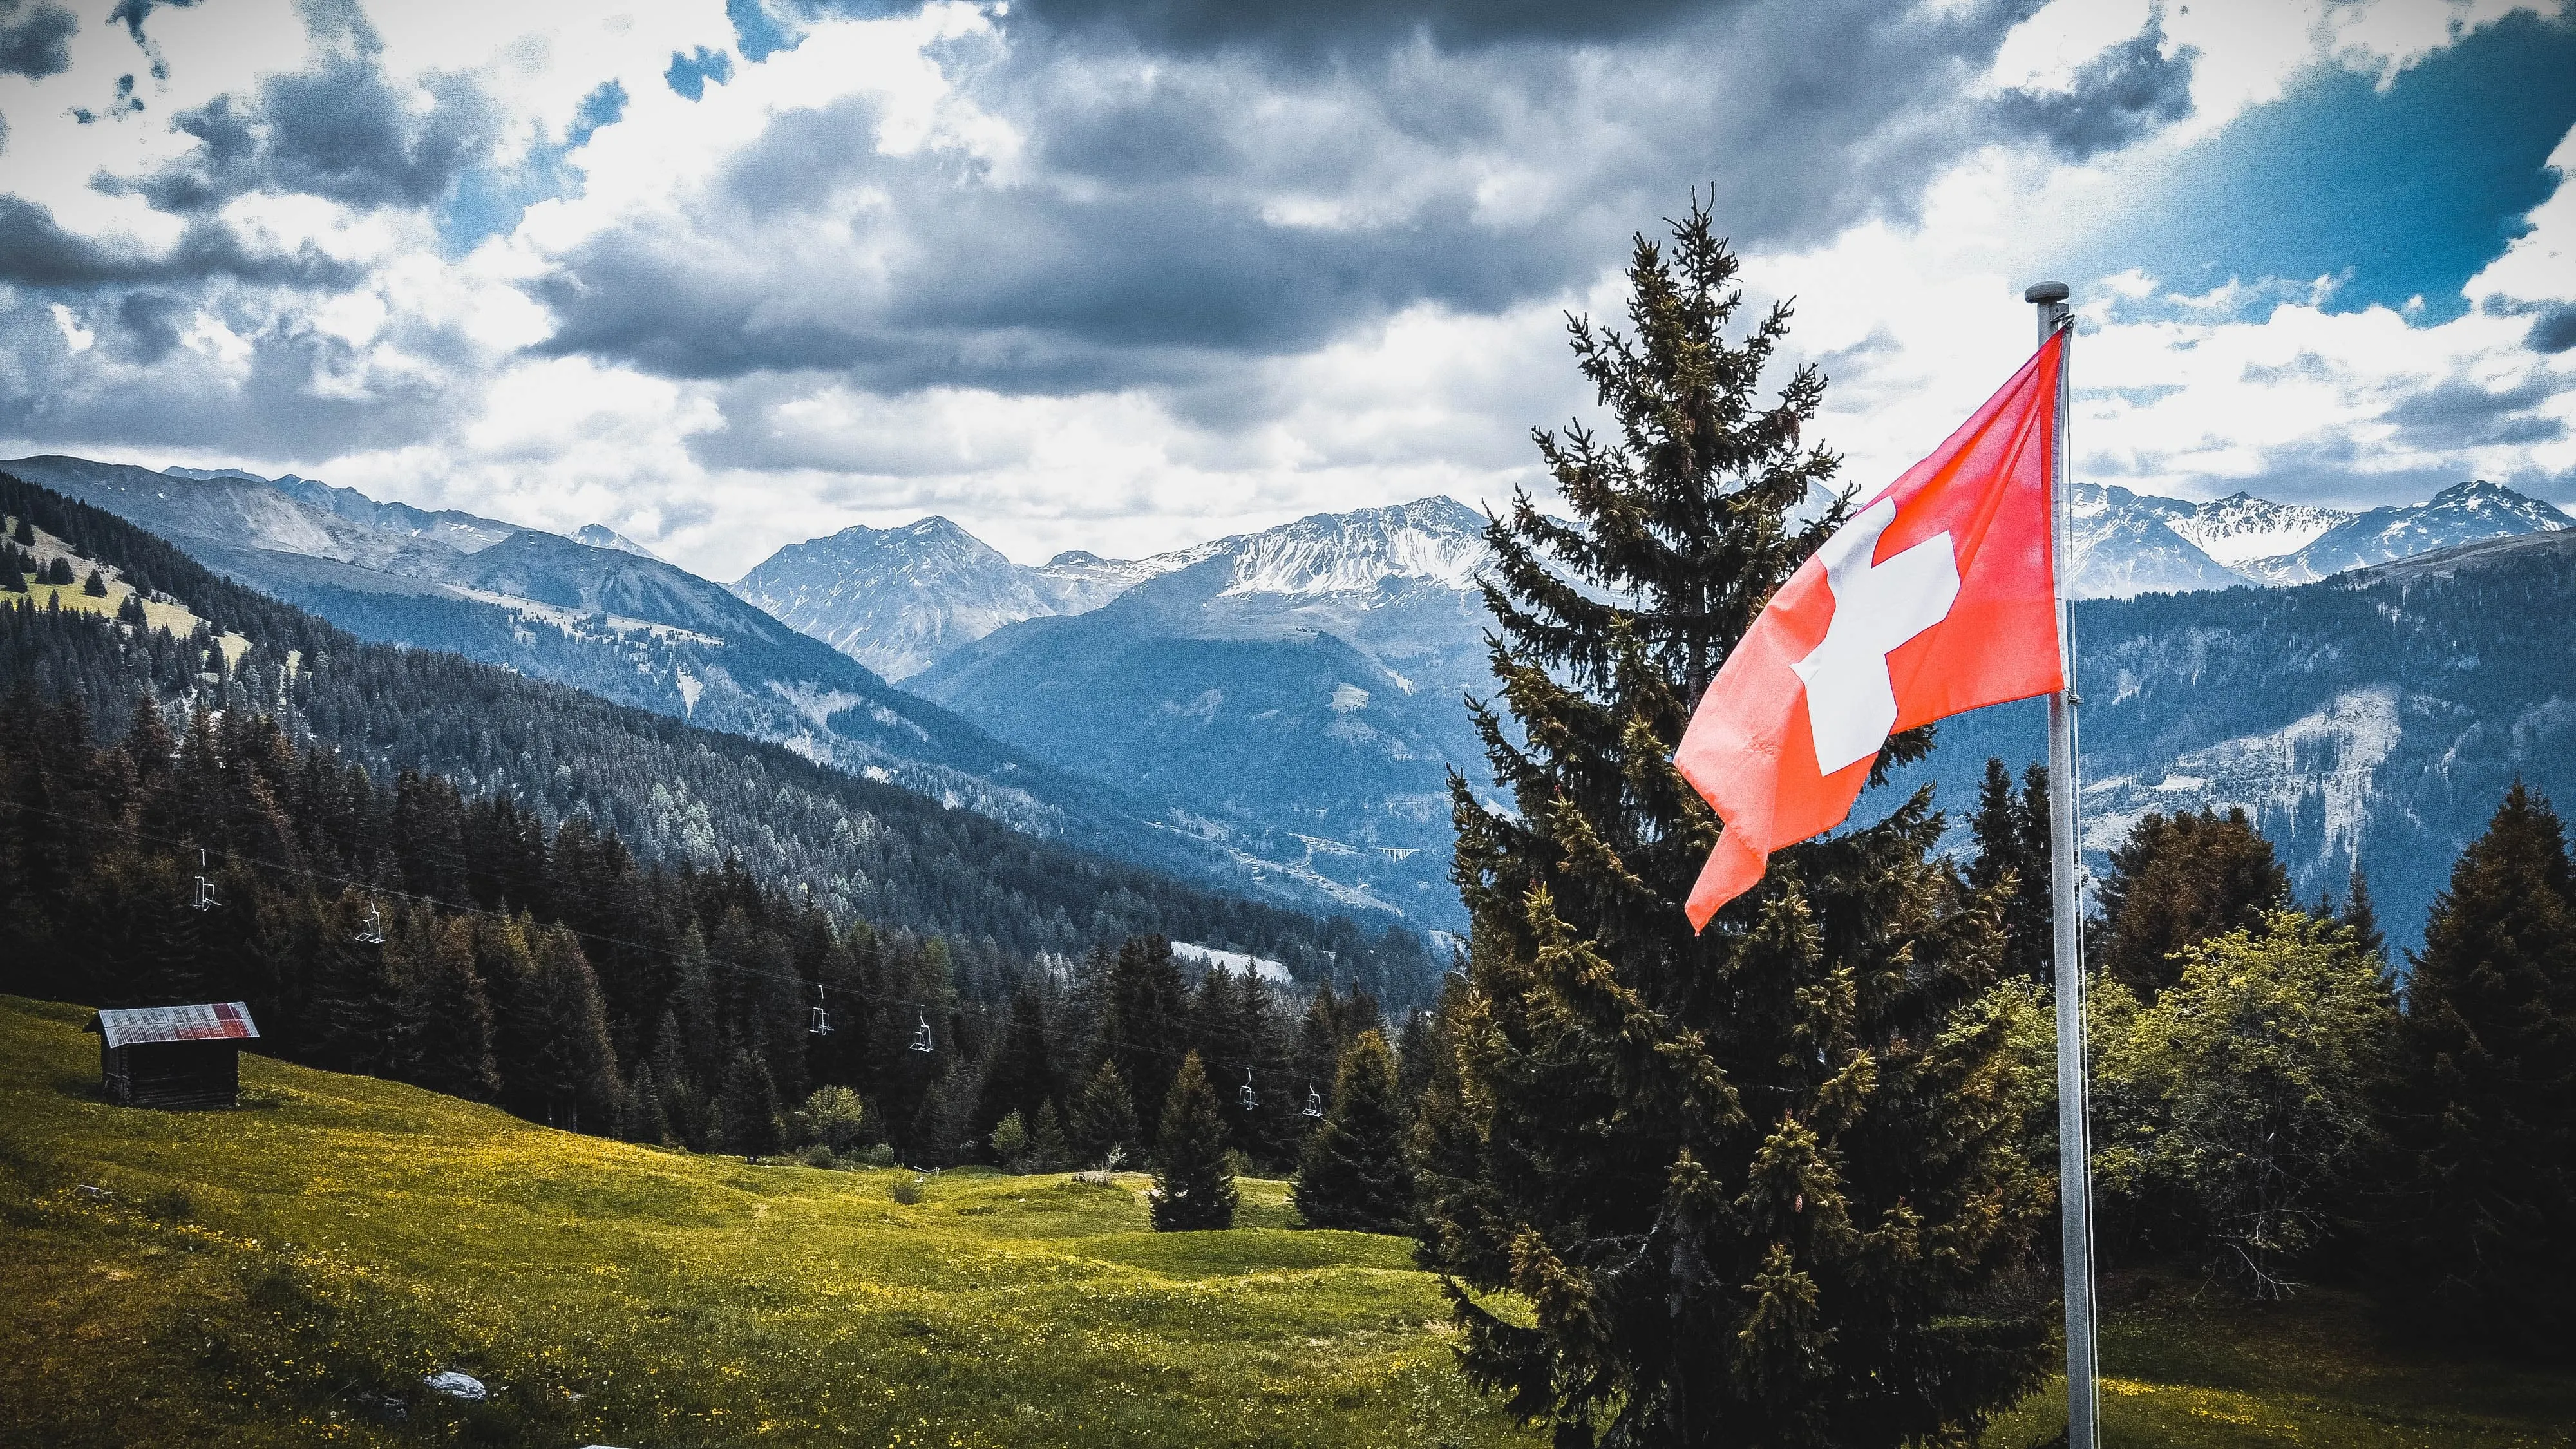 Huttentocht in Zwitserland: De 7 leukste opties